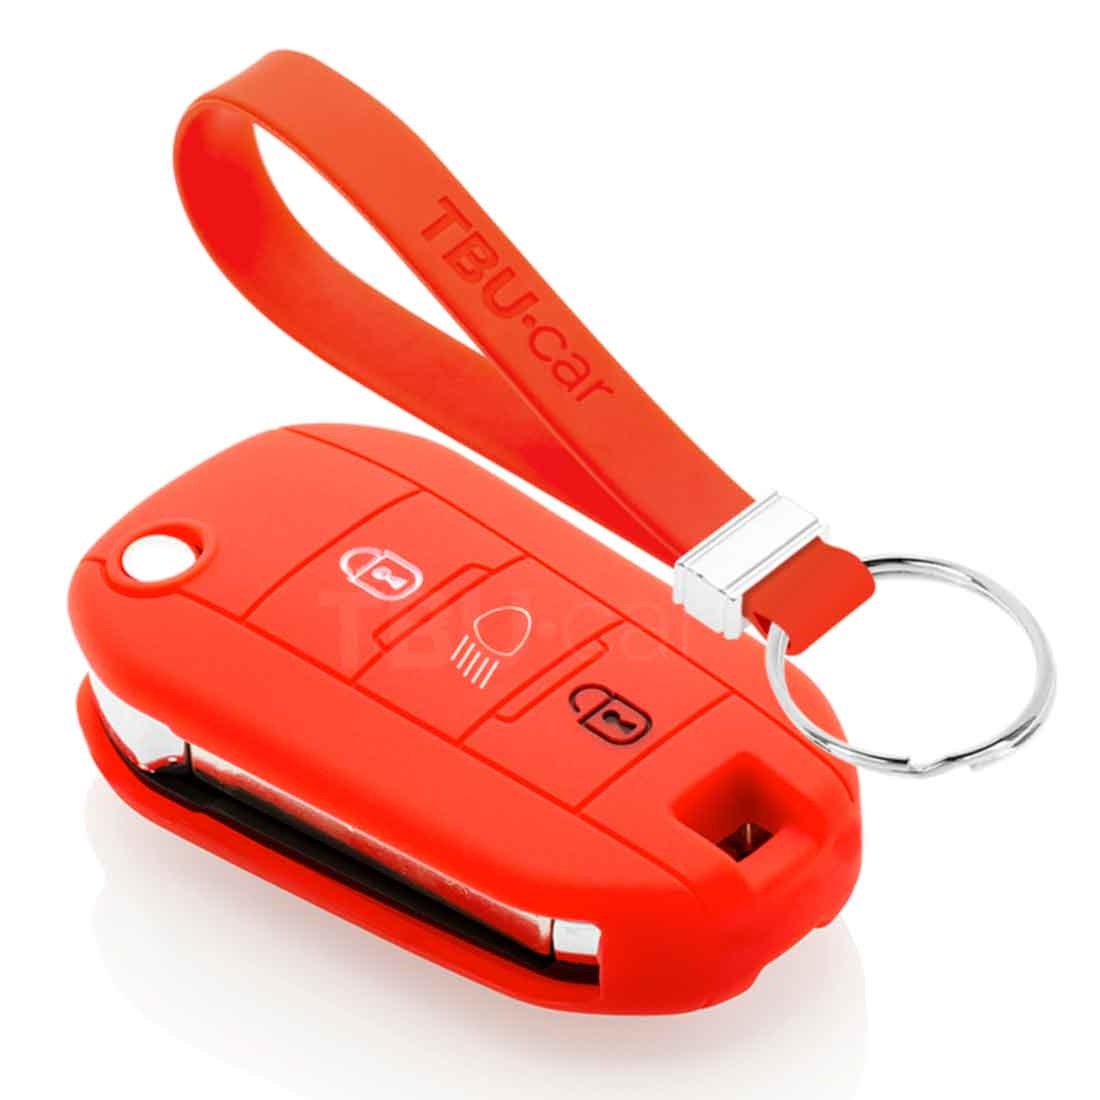 TBU car TBU car Autoschlüssel Hülle kompatibel mit Citroën 3 Tasten (Licht Taste) - Schutzhülle aus Silikon - Auto Schlüsselhülle Cover in Rot